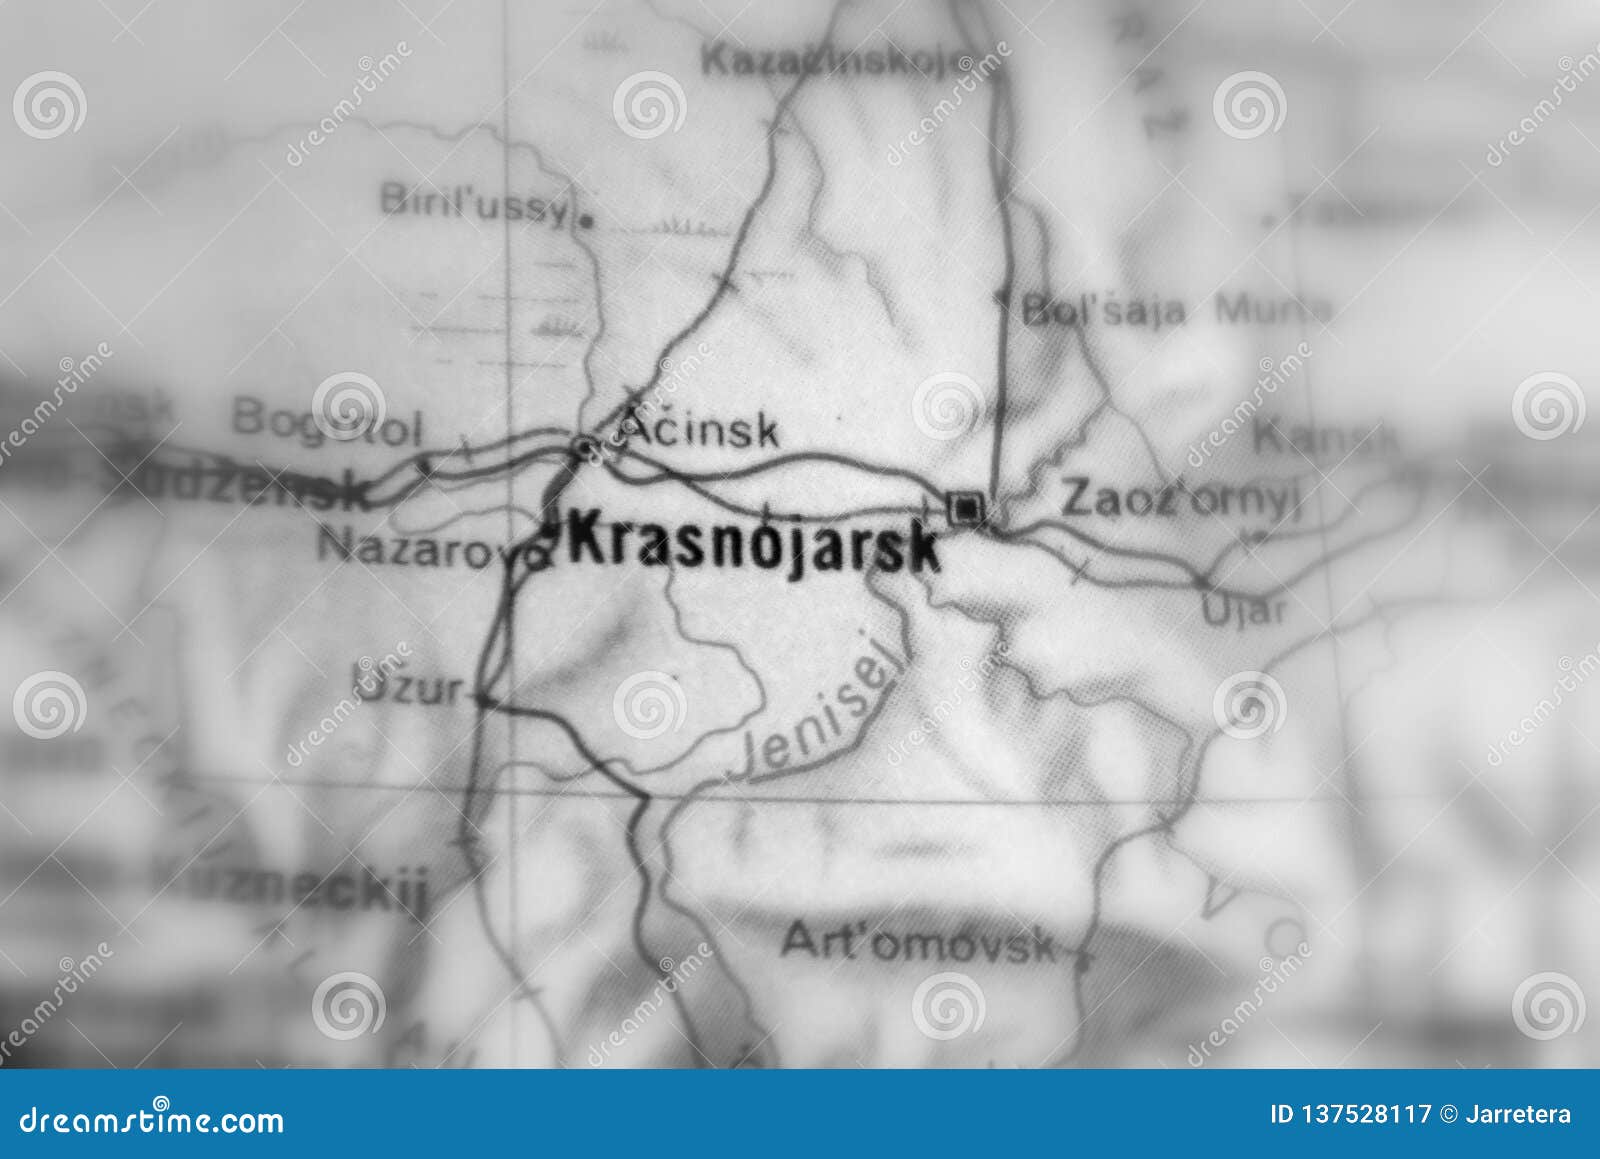 Krasnoyarsk, a City in Russia. Stock Image - Image of krasnoyarsk